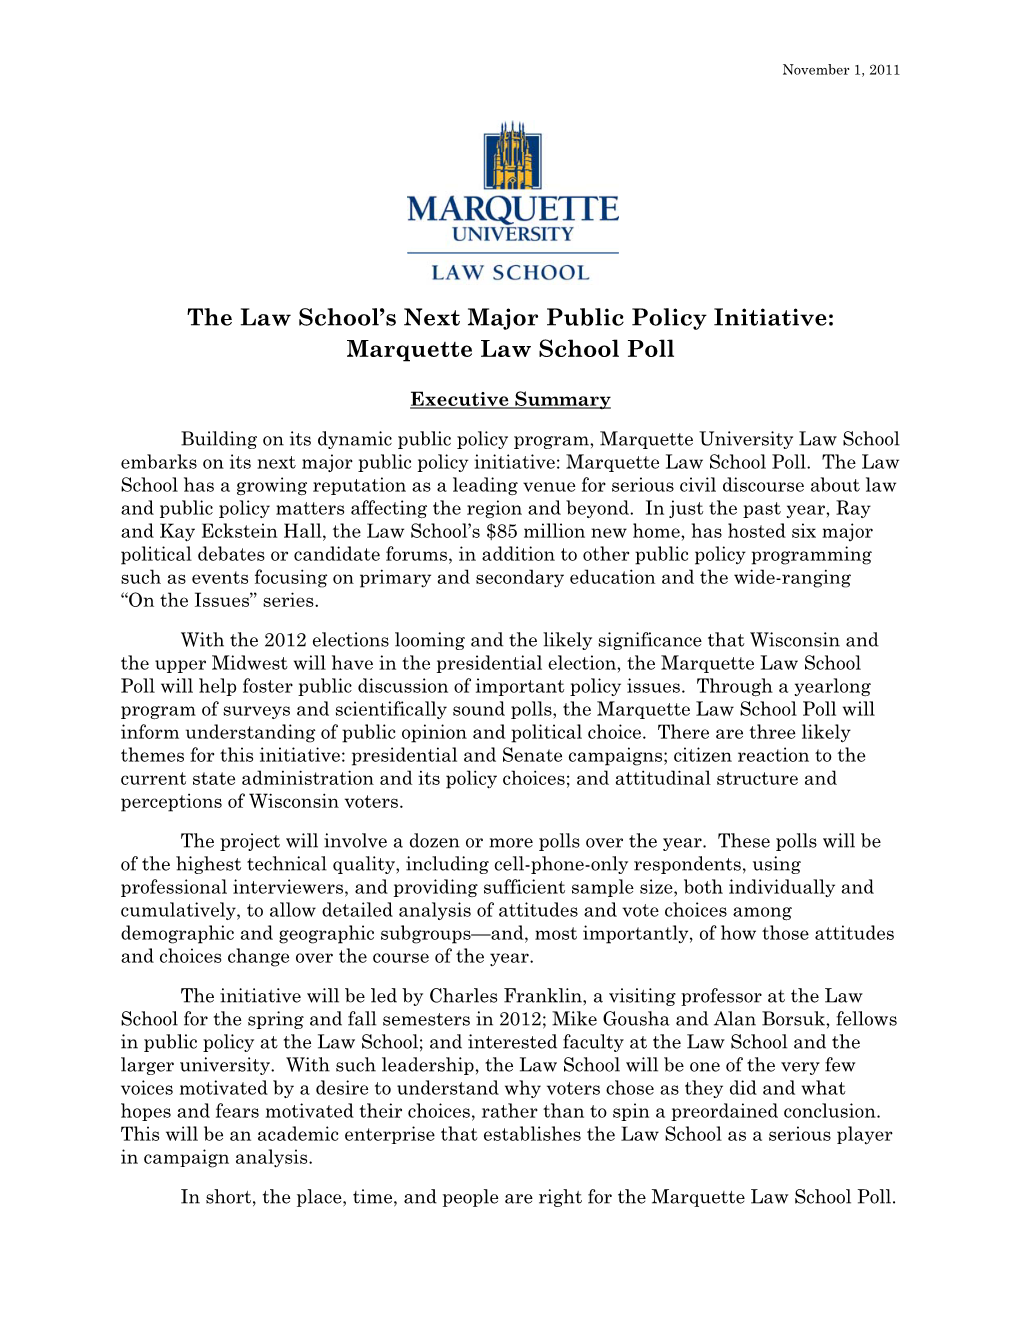 Marquette Law School Poll